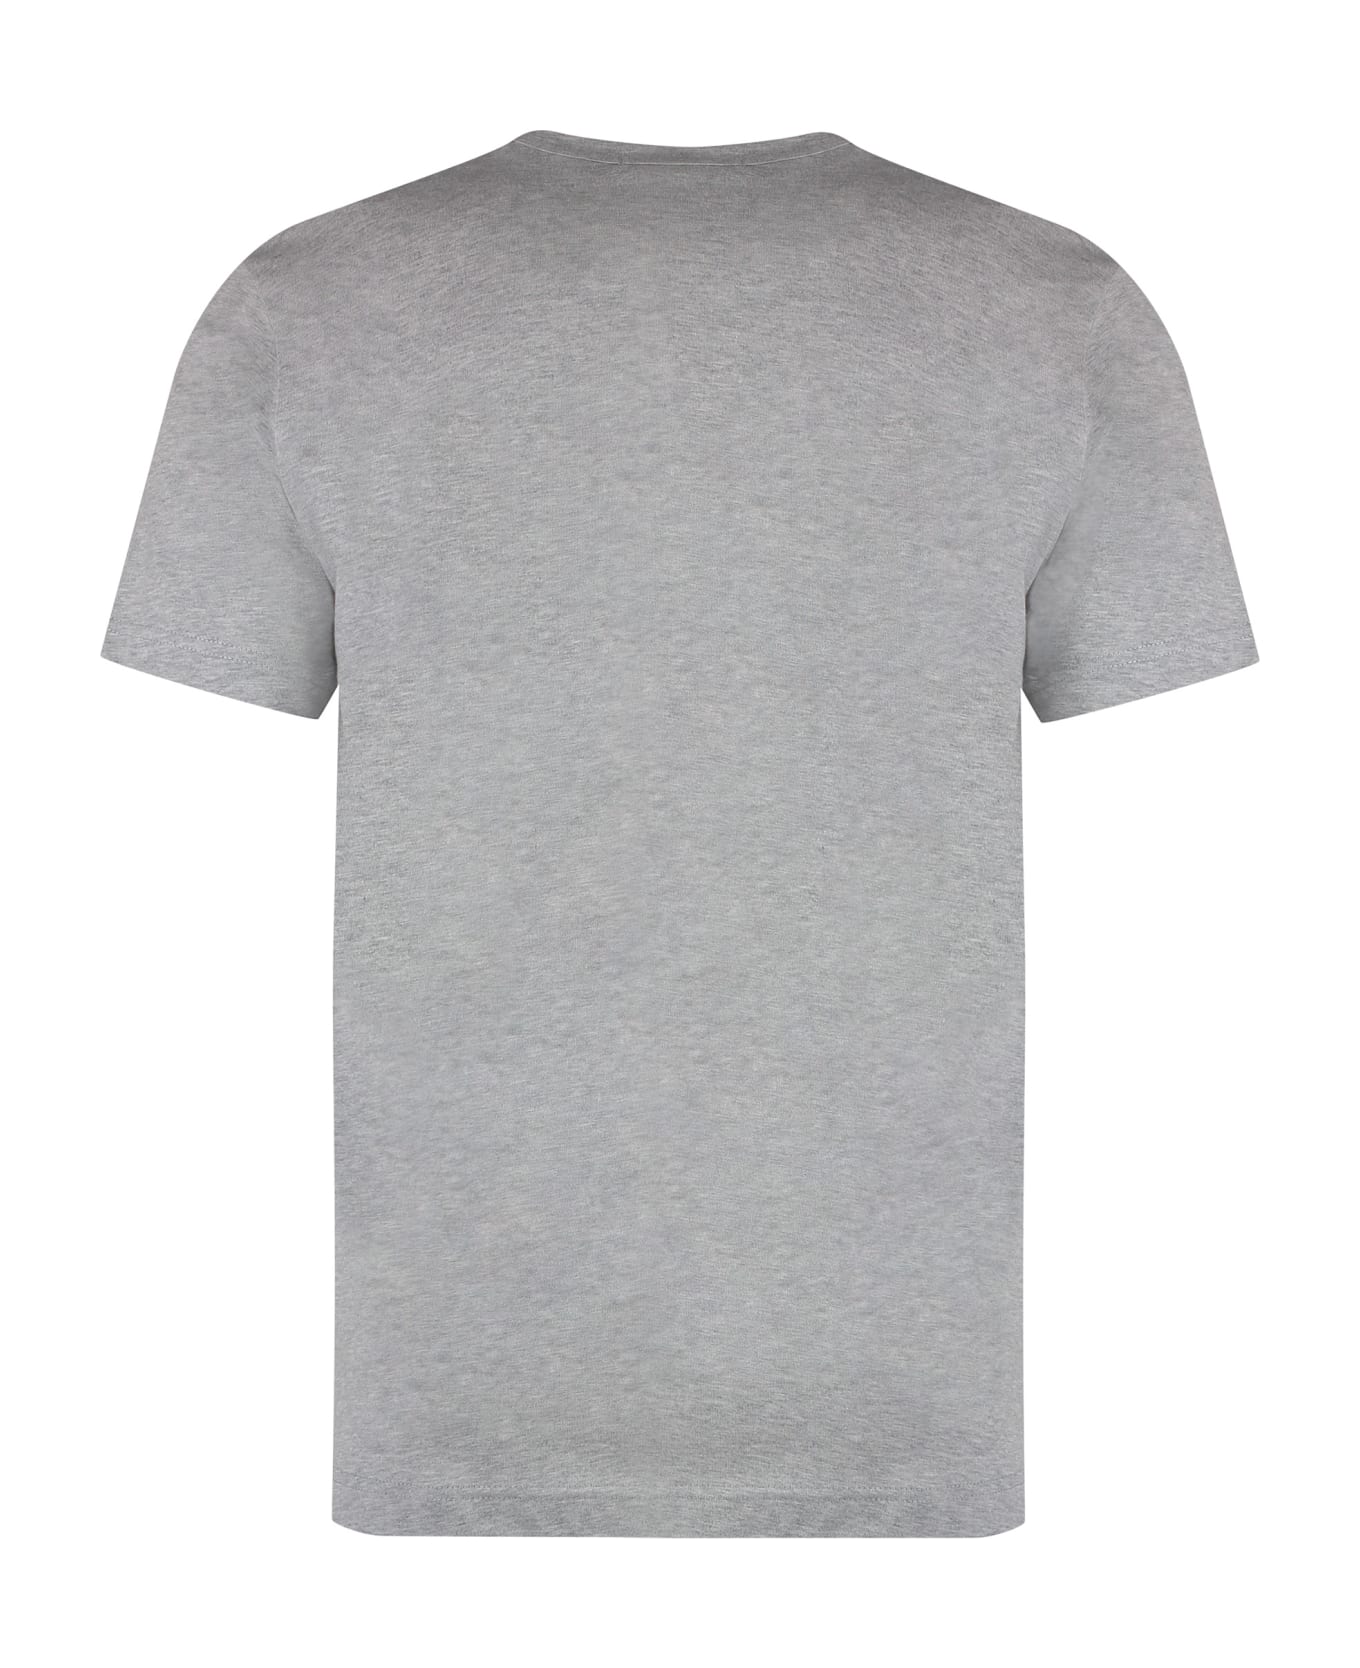 Comme des Garçons Shirt Andy Warhol Print Cotton T-shirt - grey シャツ